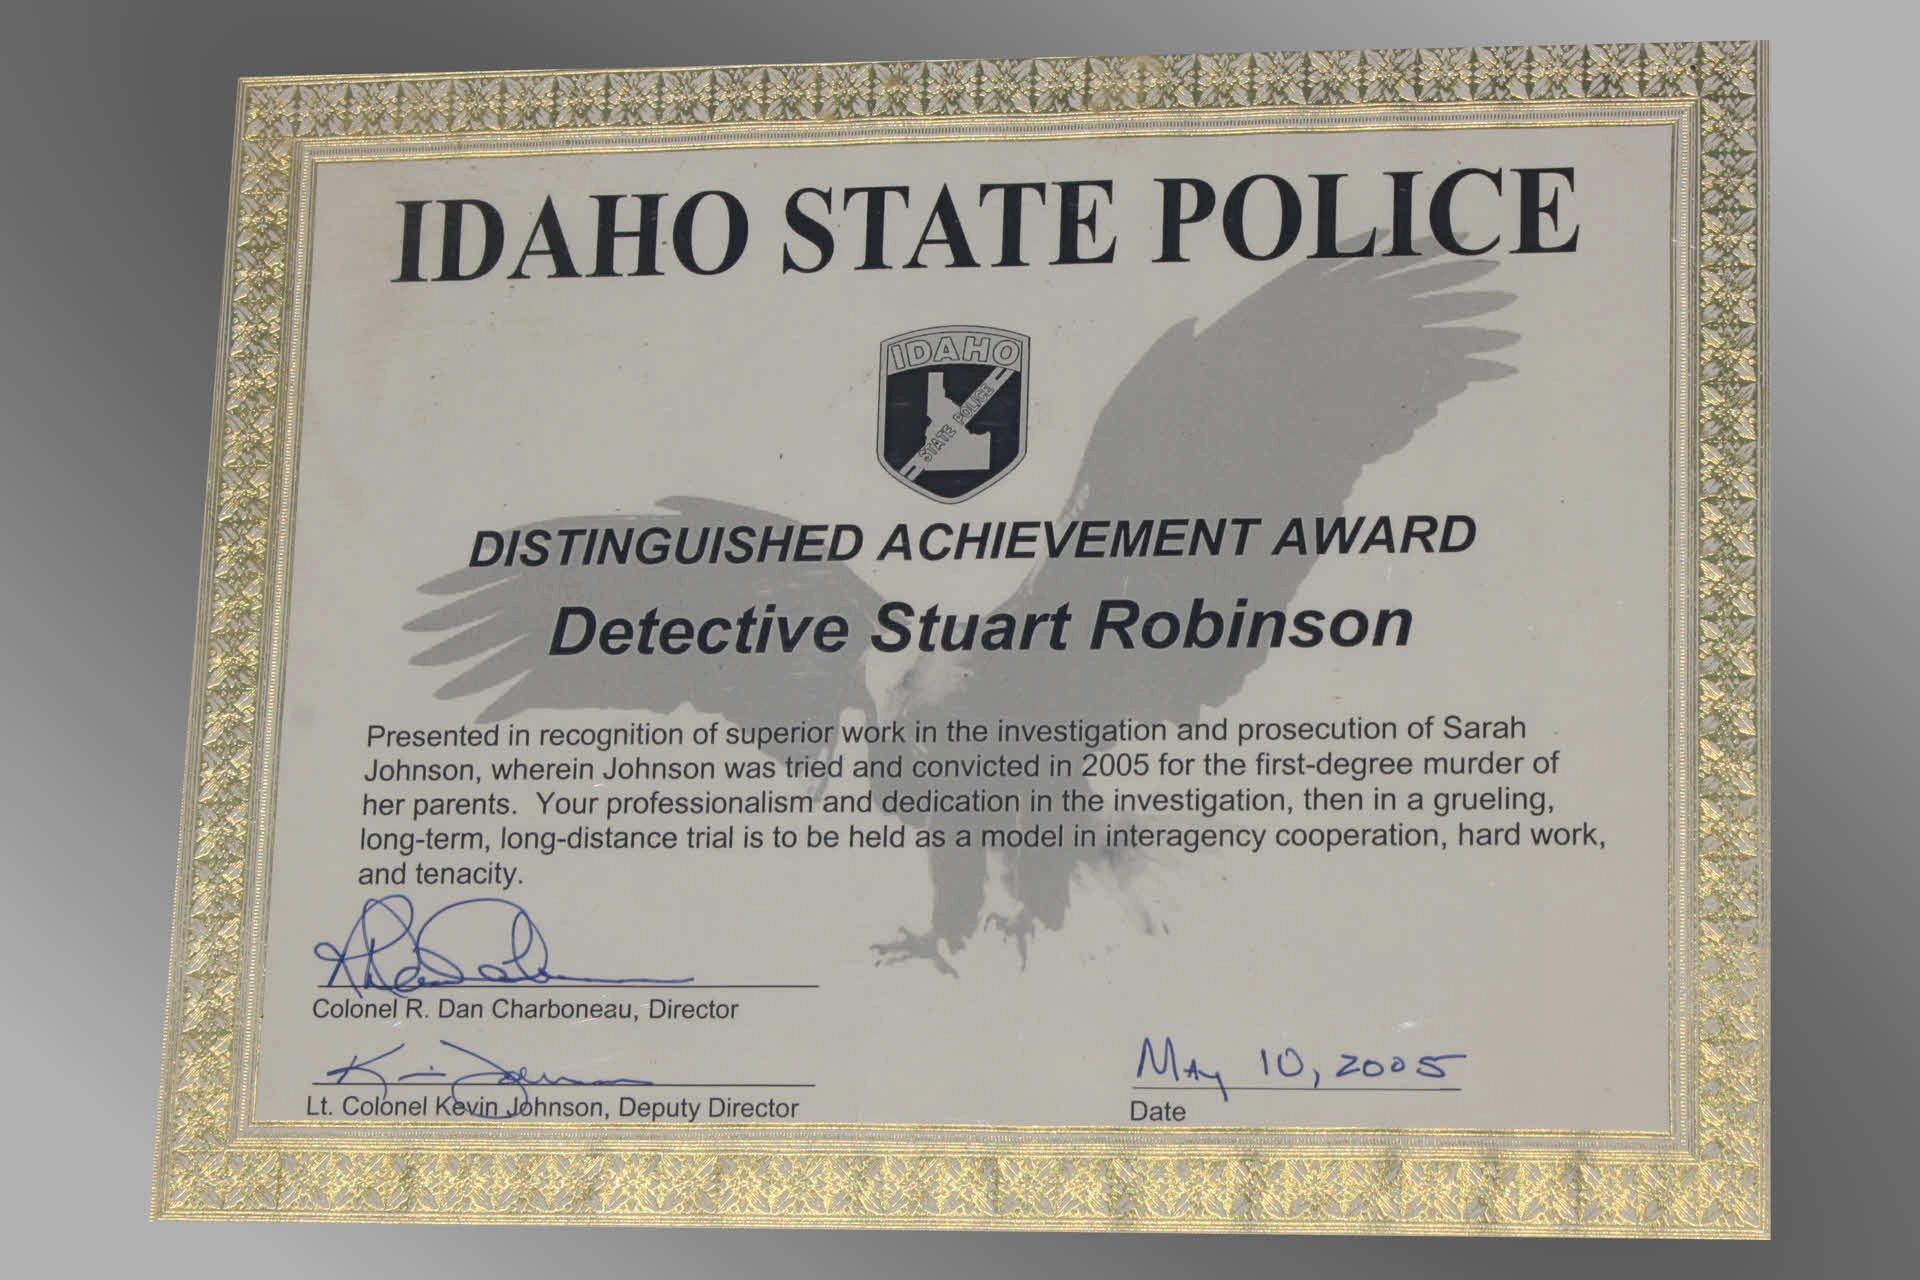 A Distinguished Achievement Award for Detective Stuart Robinson